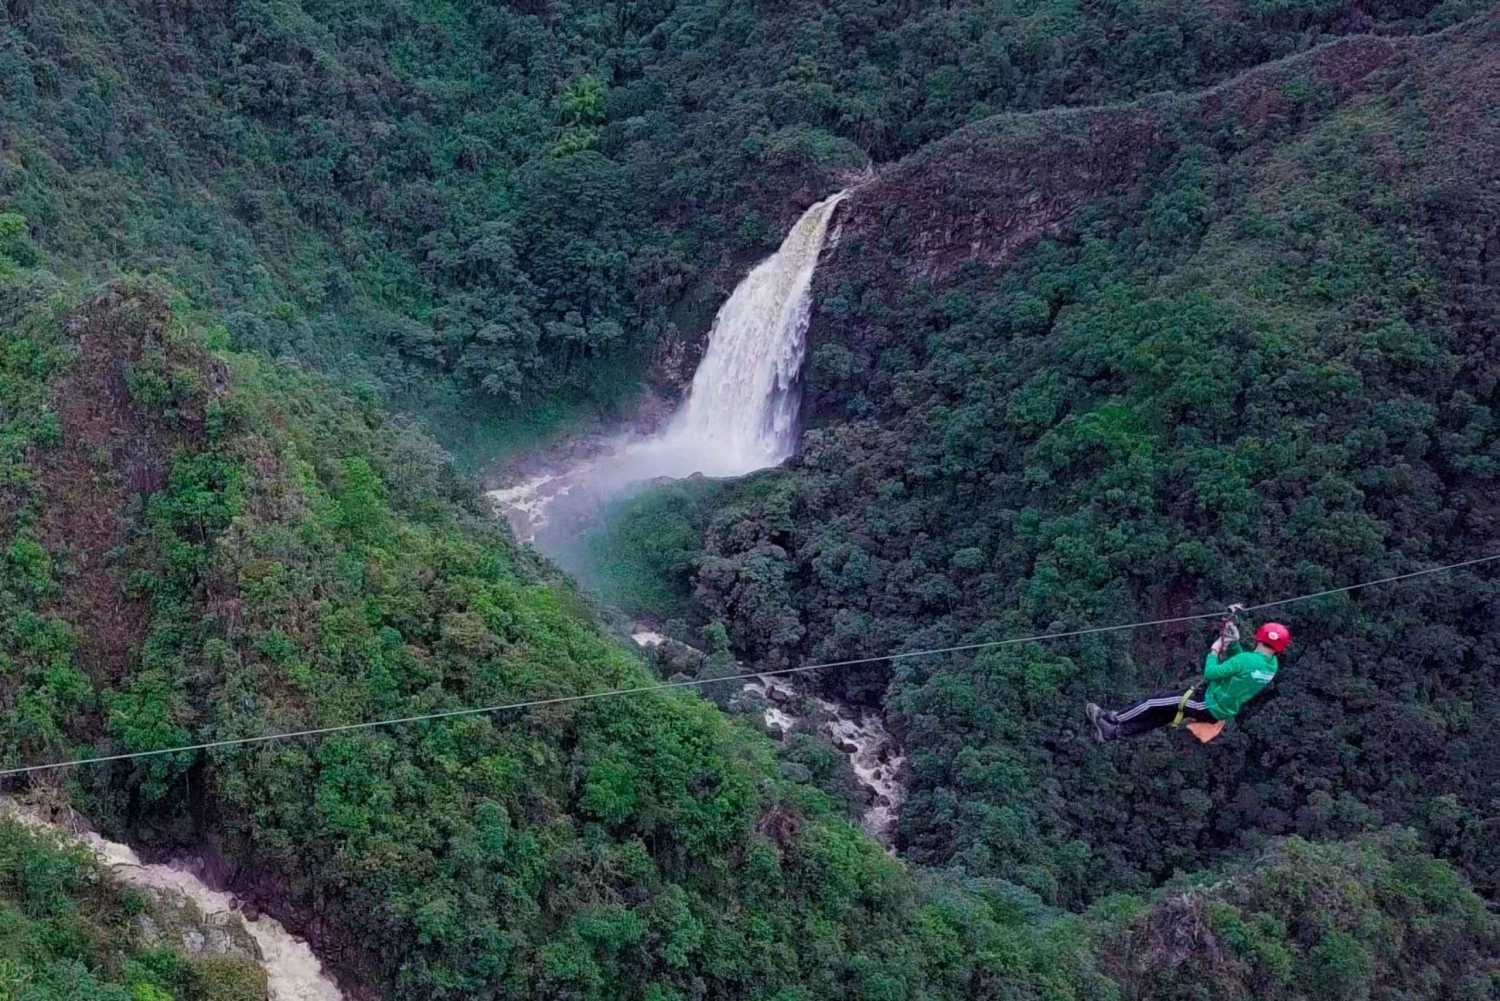 Desde Medellín: Tirolina épica y cascada gigante